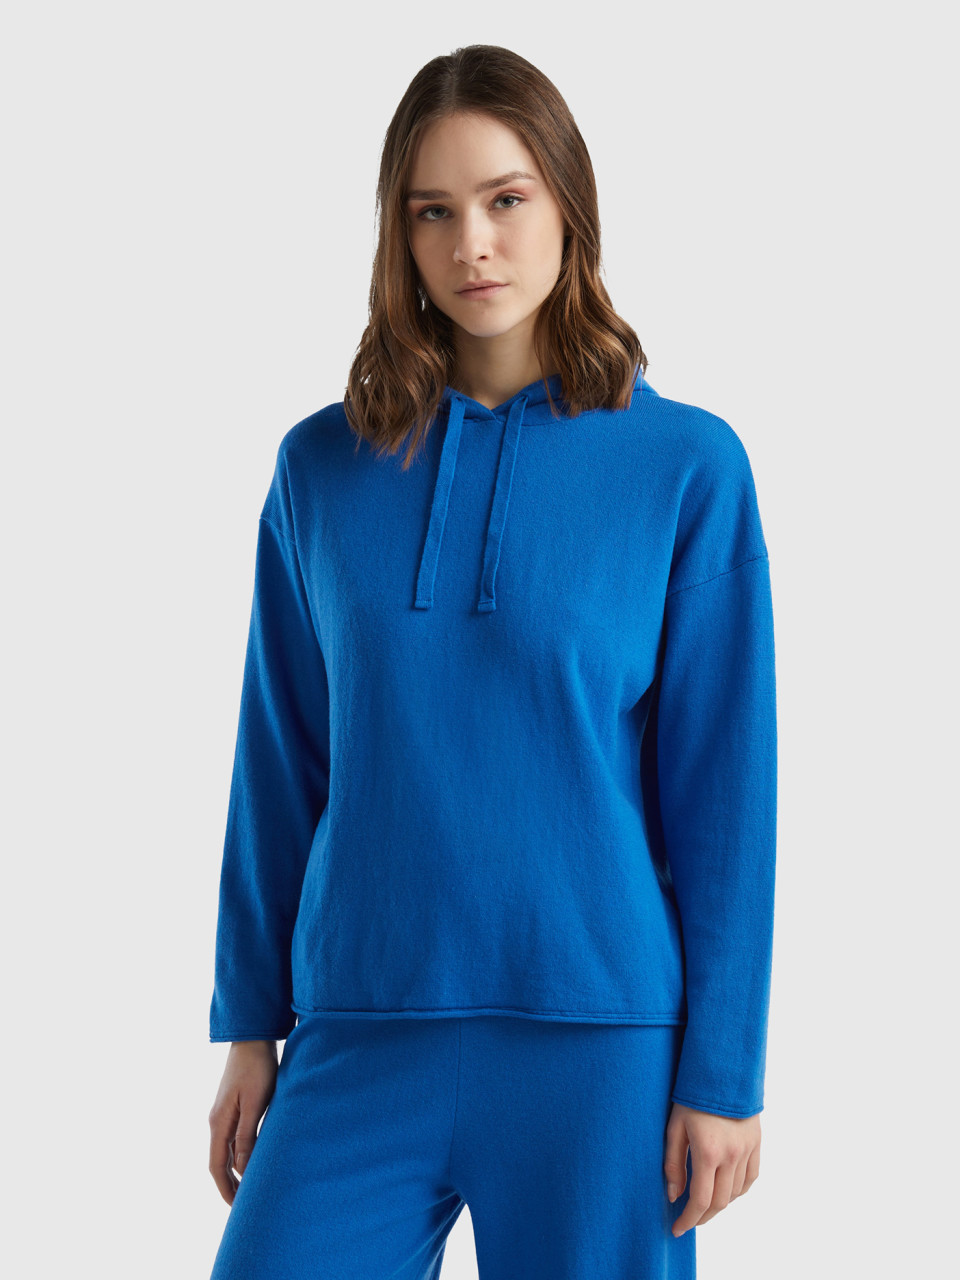 Benetton, Blue Cashmere Blend Sweater With Hood, Blue, Women